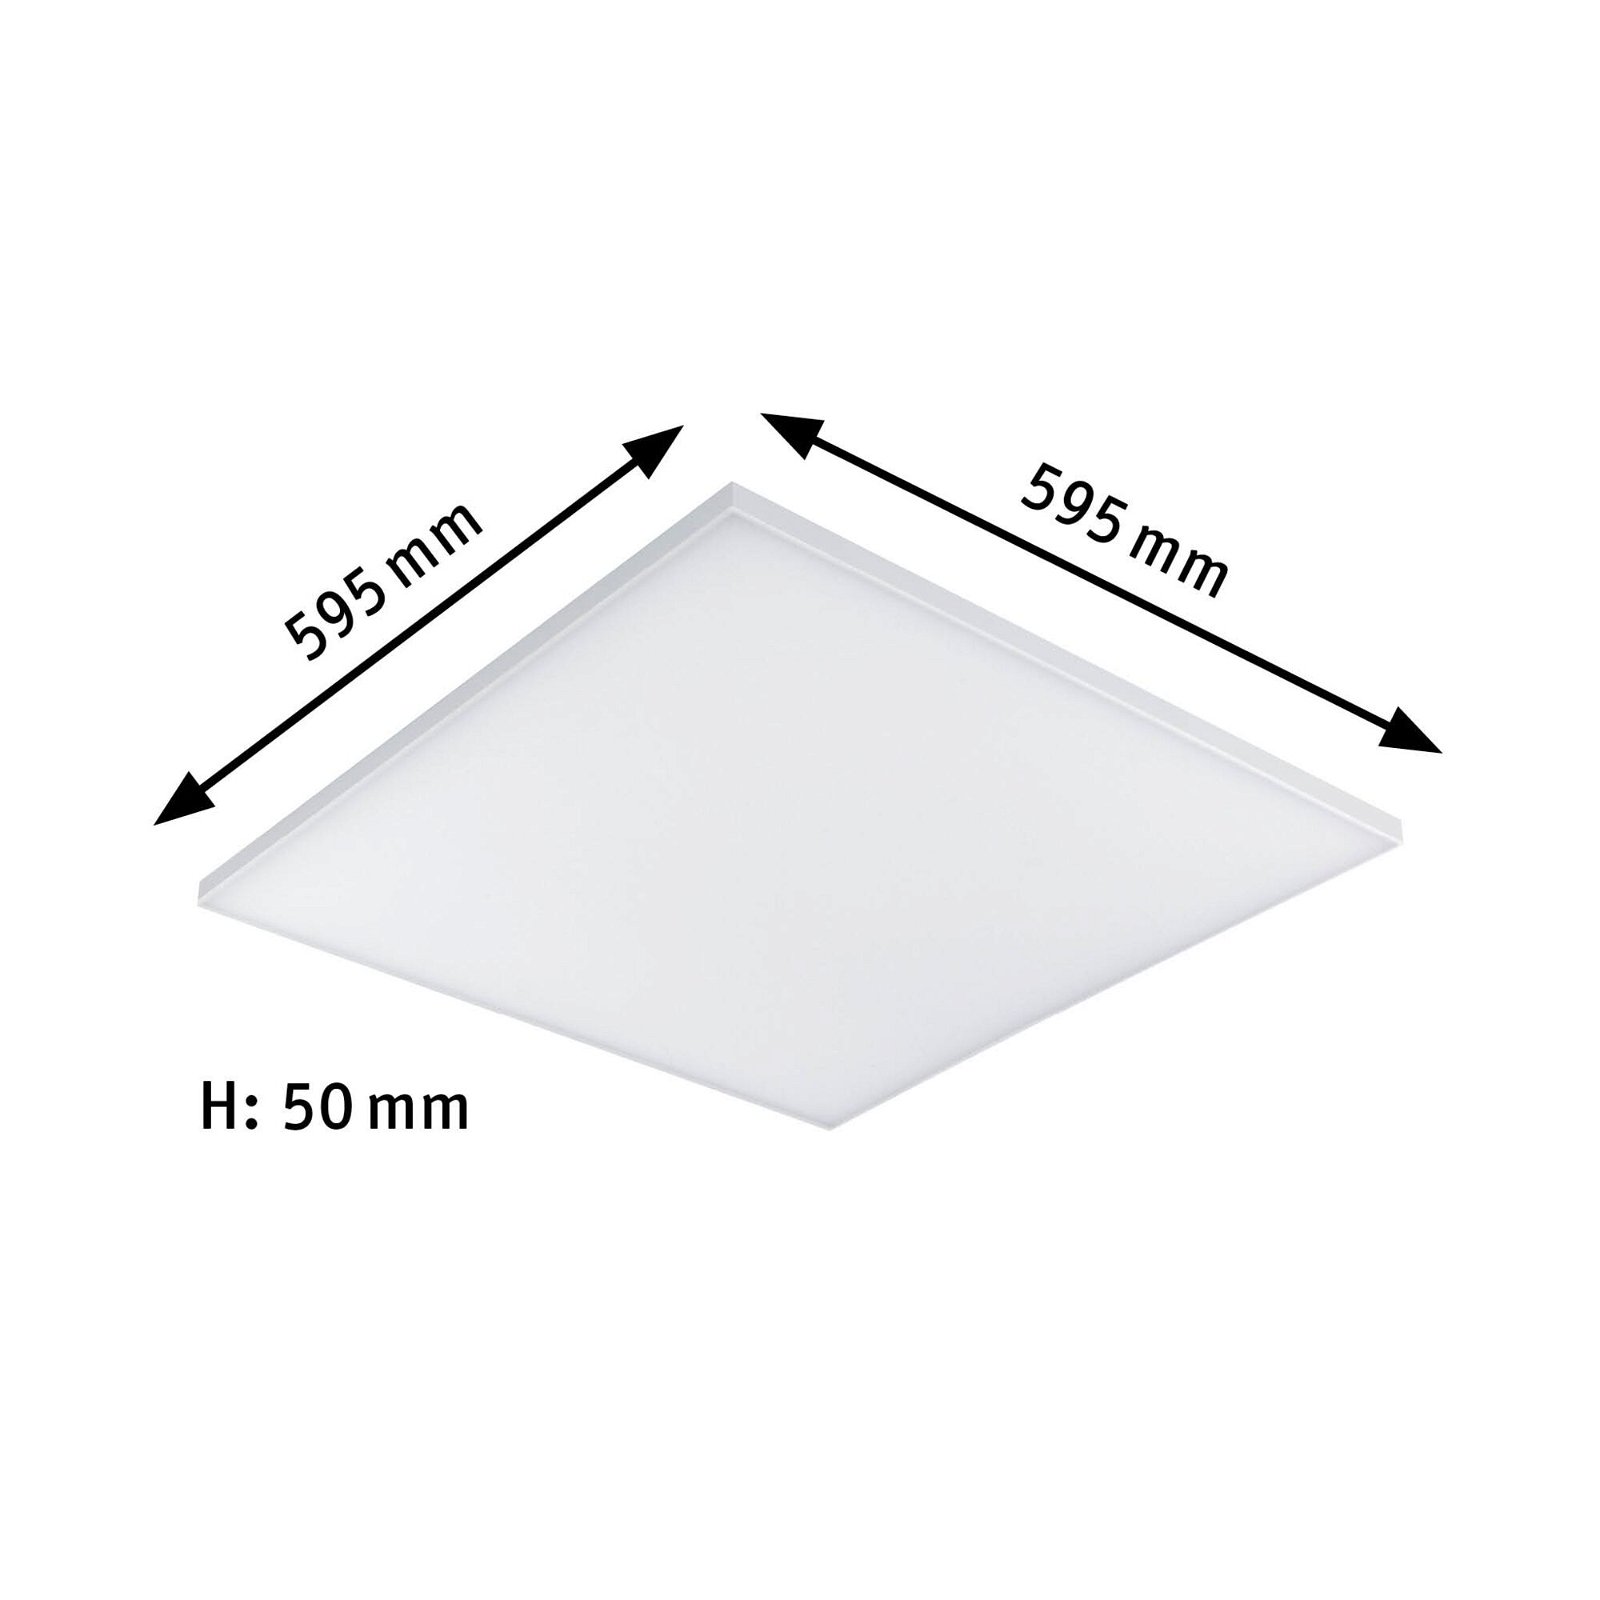 LED Panel Velora eckig 600x600mm 3000K Weiß matt